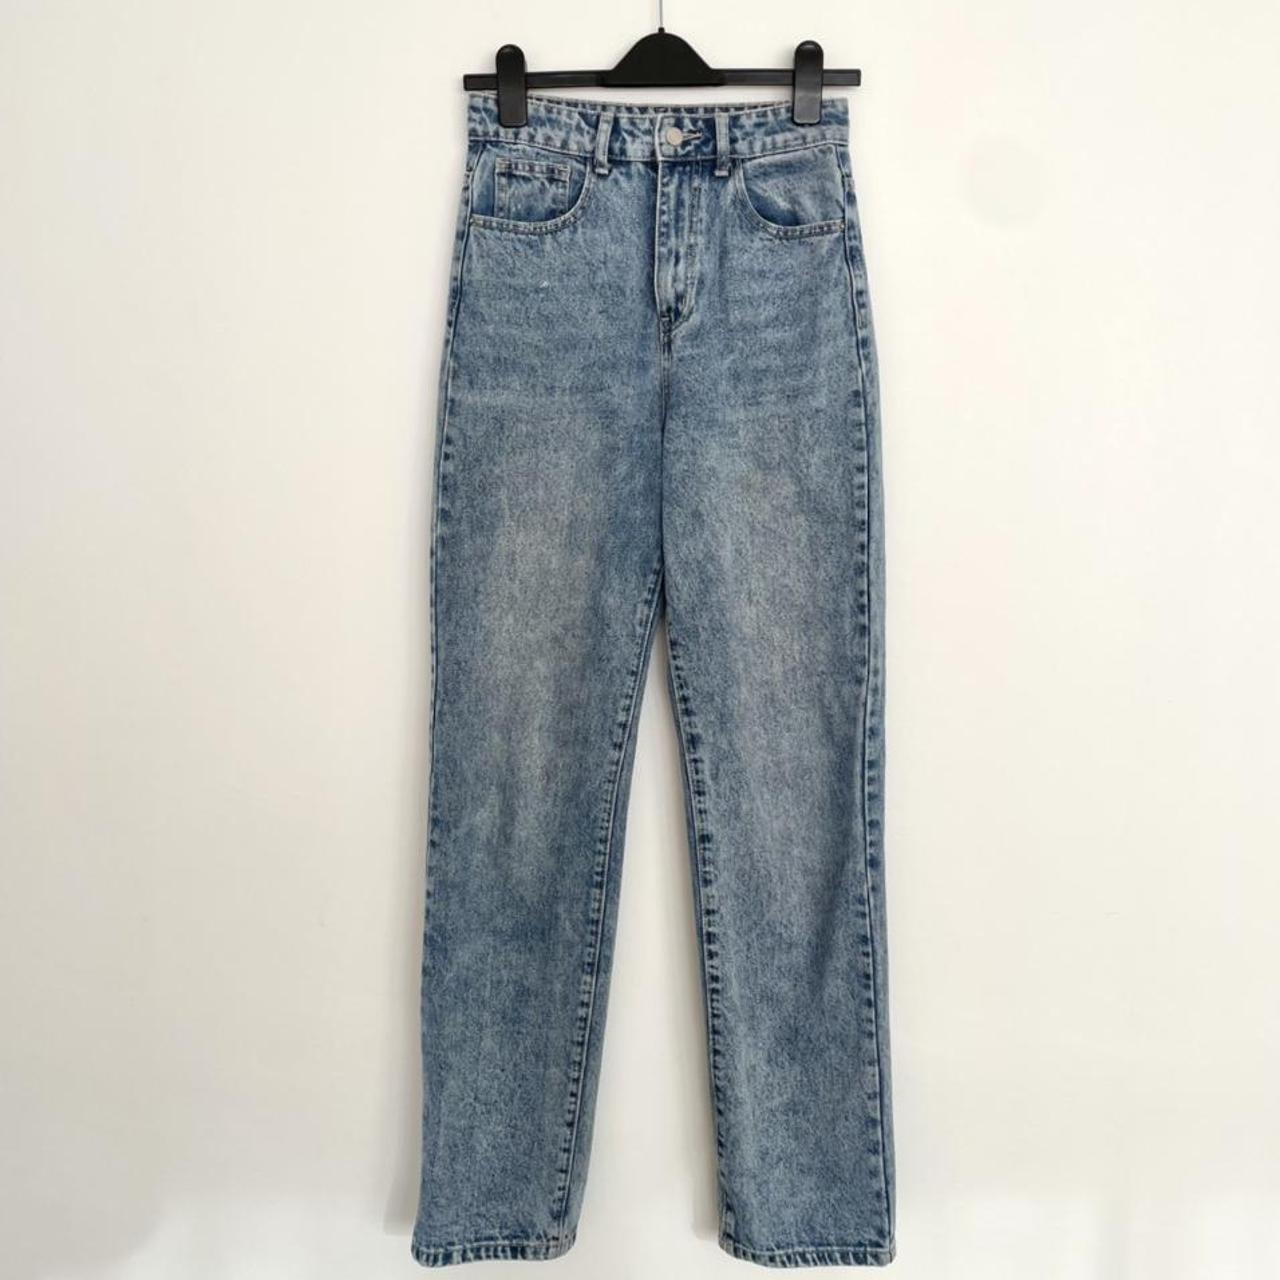 Blue denim straight leg jeans originally from... - Depop